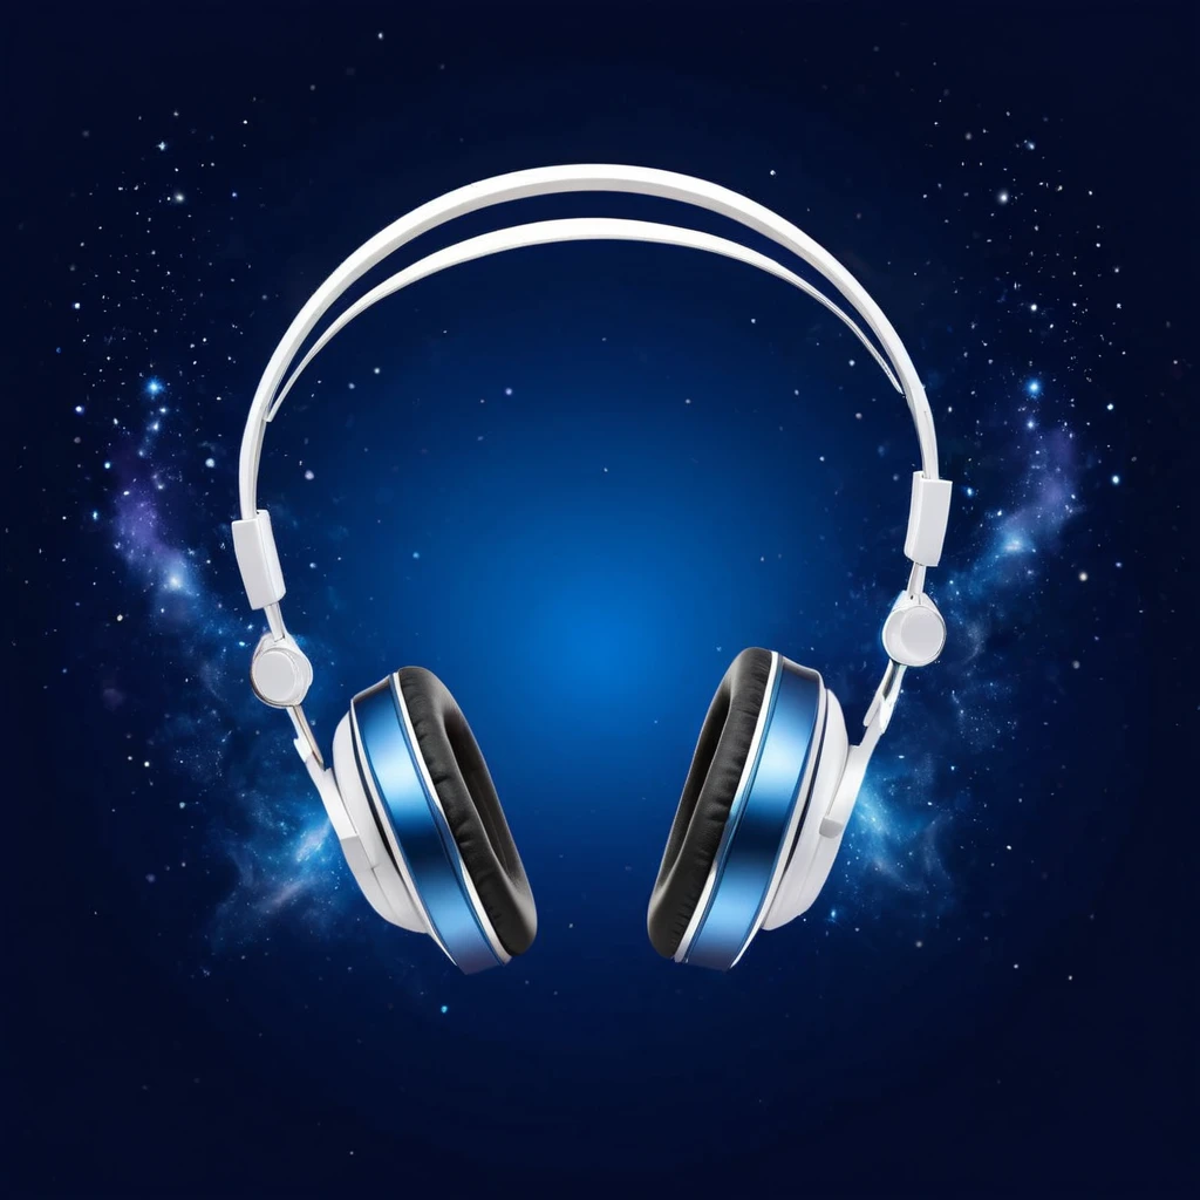 (headphones showcase) <lora:05_headphones_showcase:1.1>
Indigo background,
high quality, professional, highres, amazing, d...